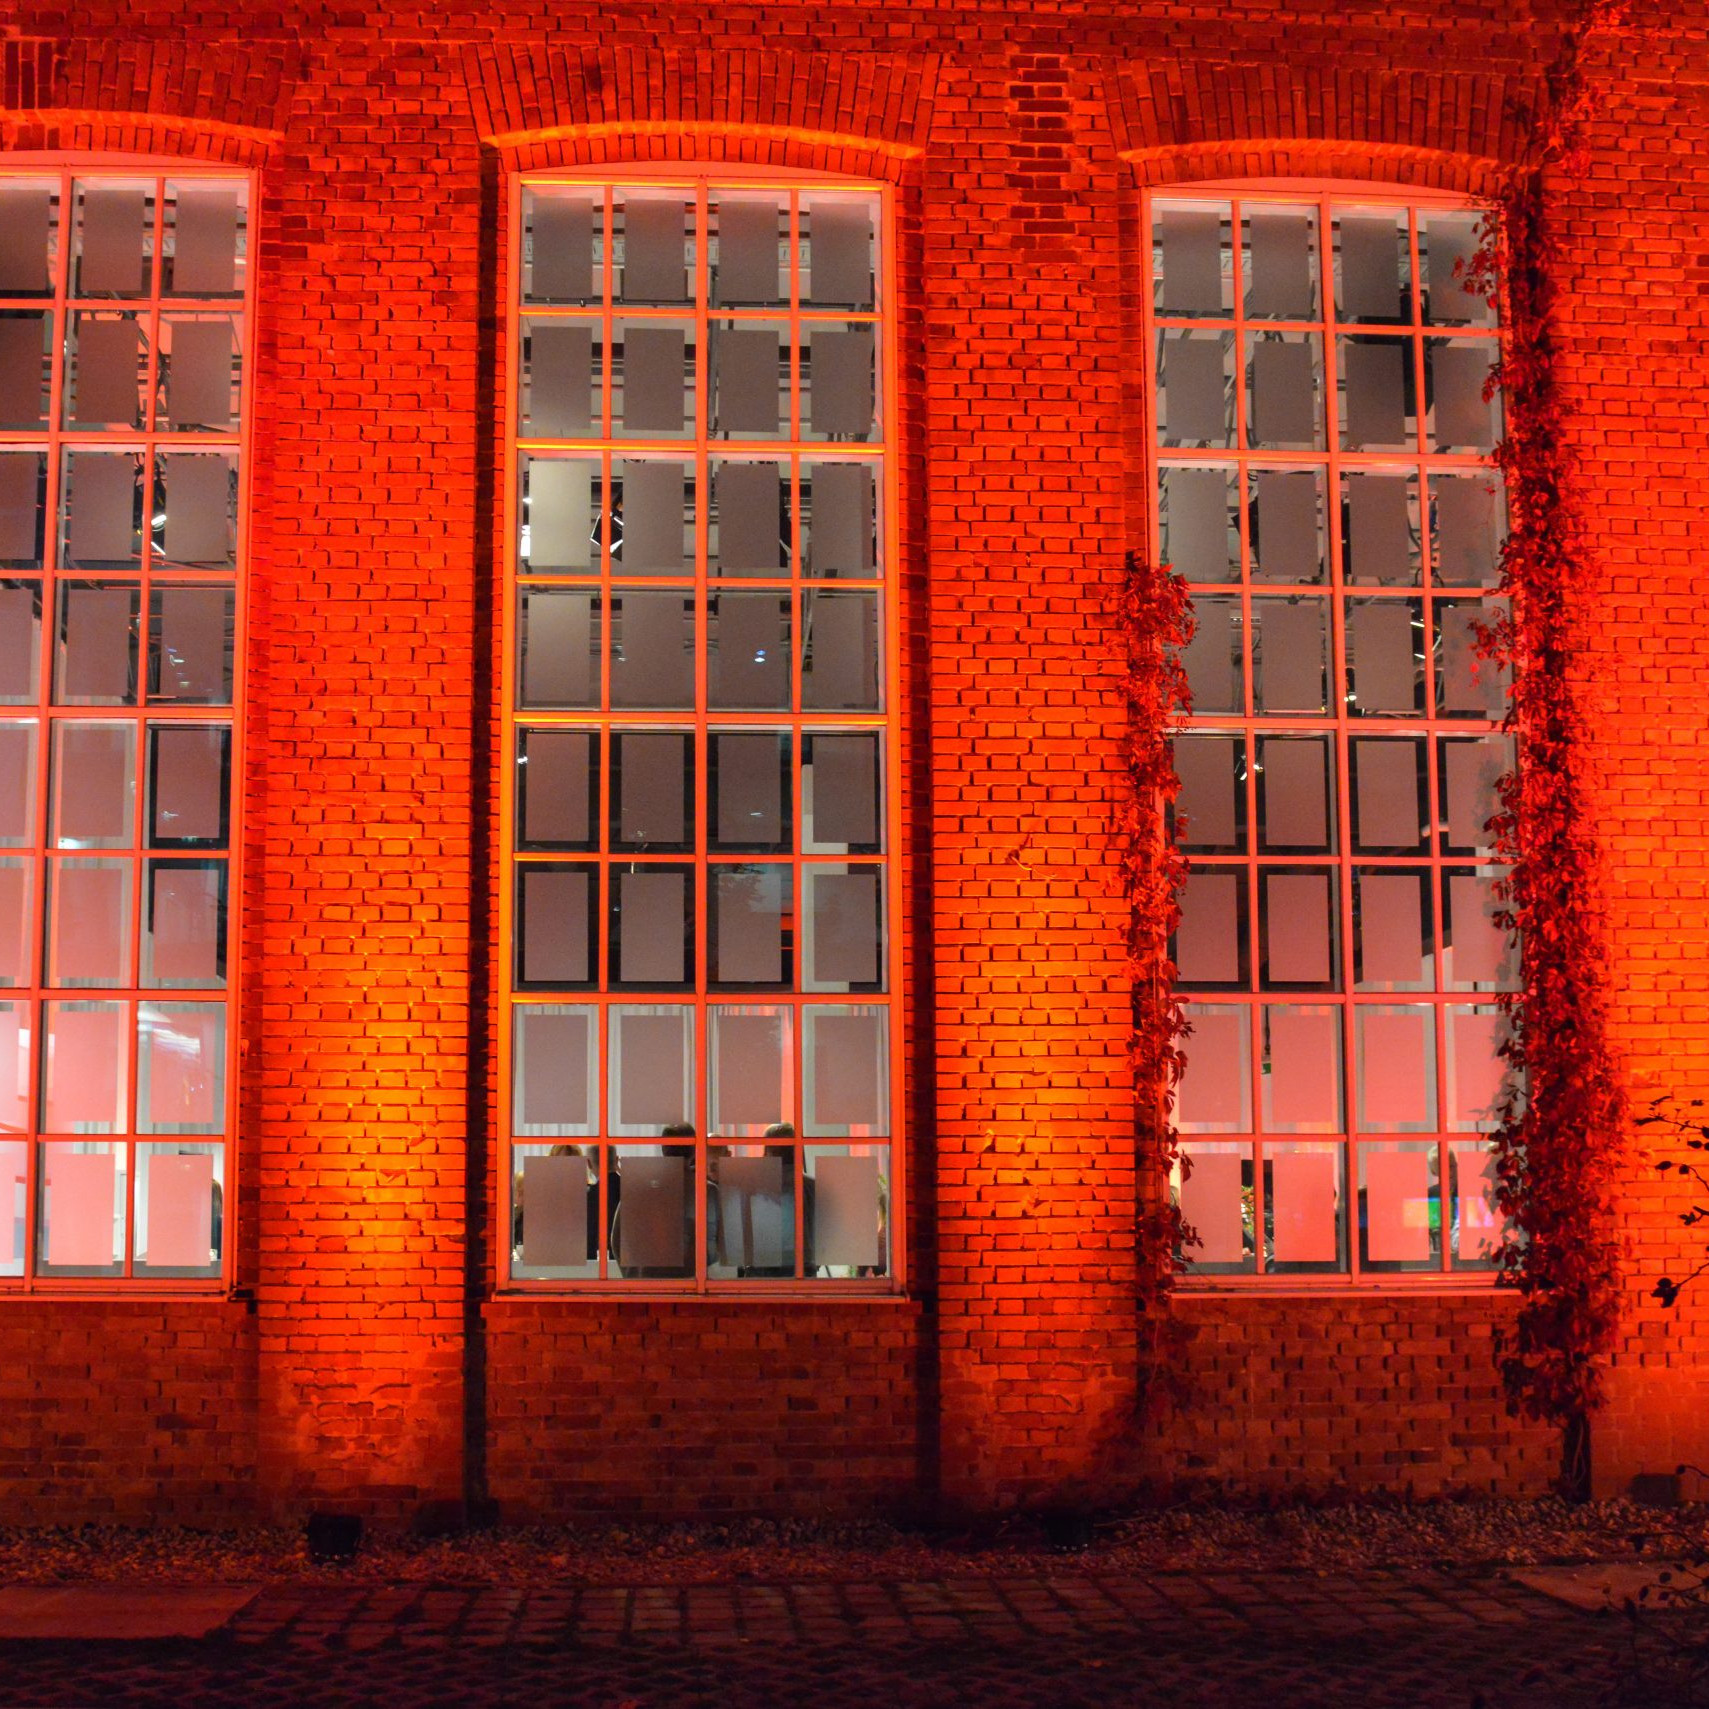 Aliud Pharma: Altes Backsteingebäude mit großen Fensterfronten in rot beleuchtet.